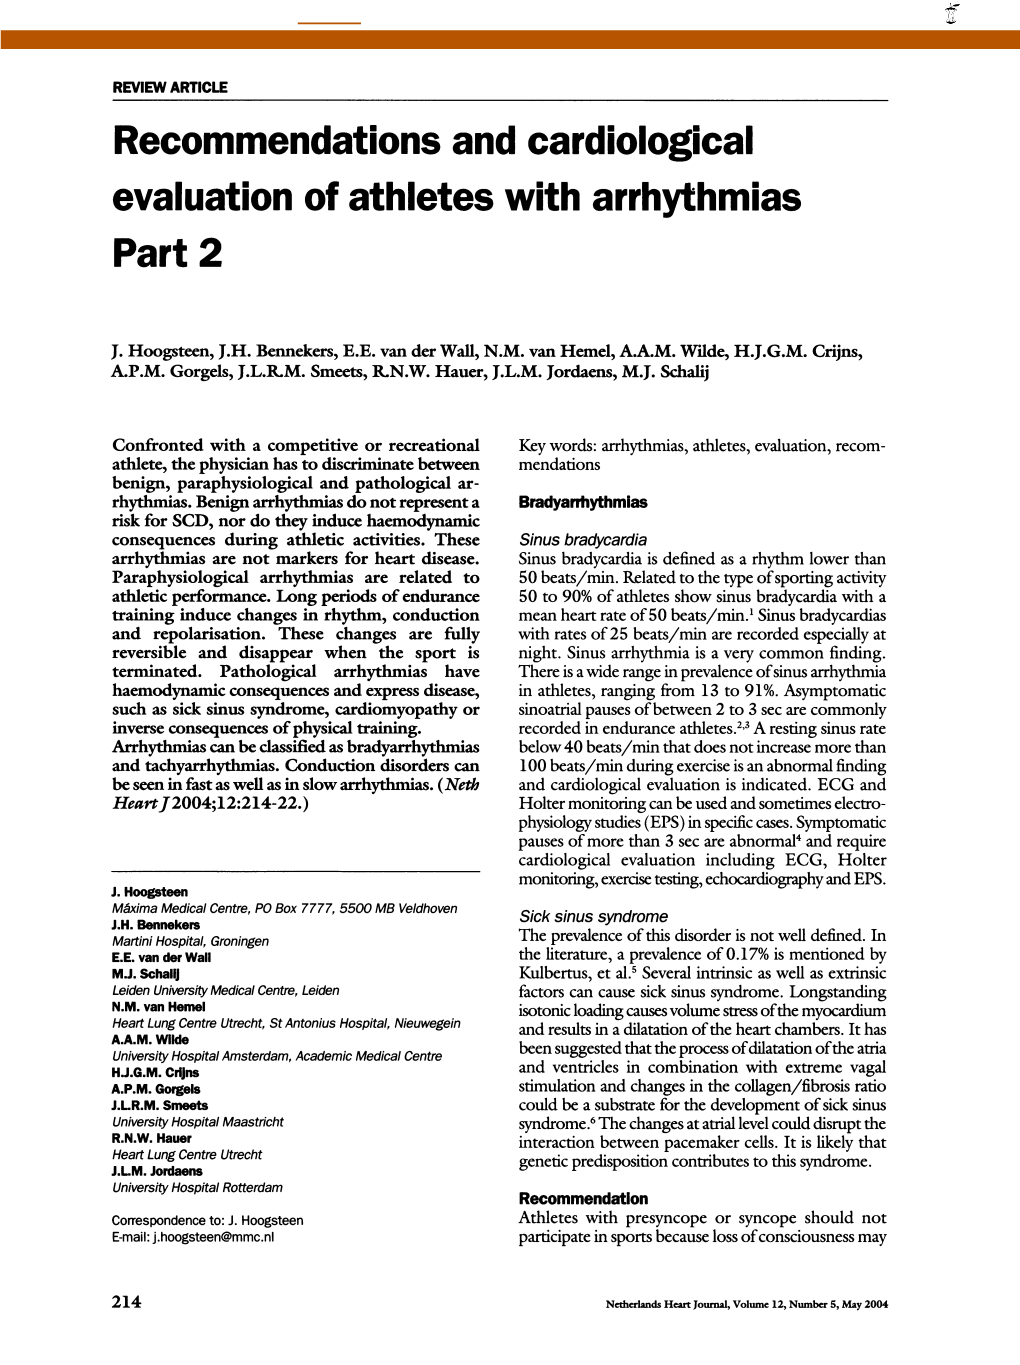 Evaluation of Athletes with Arrhythmias